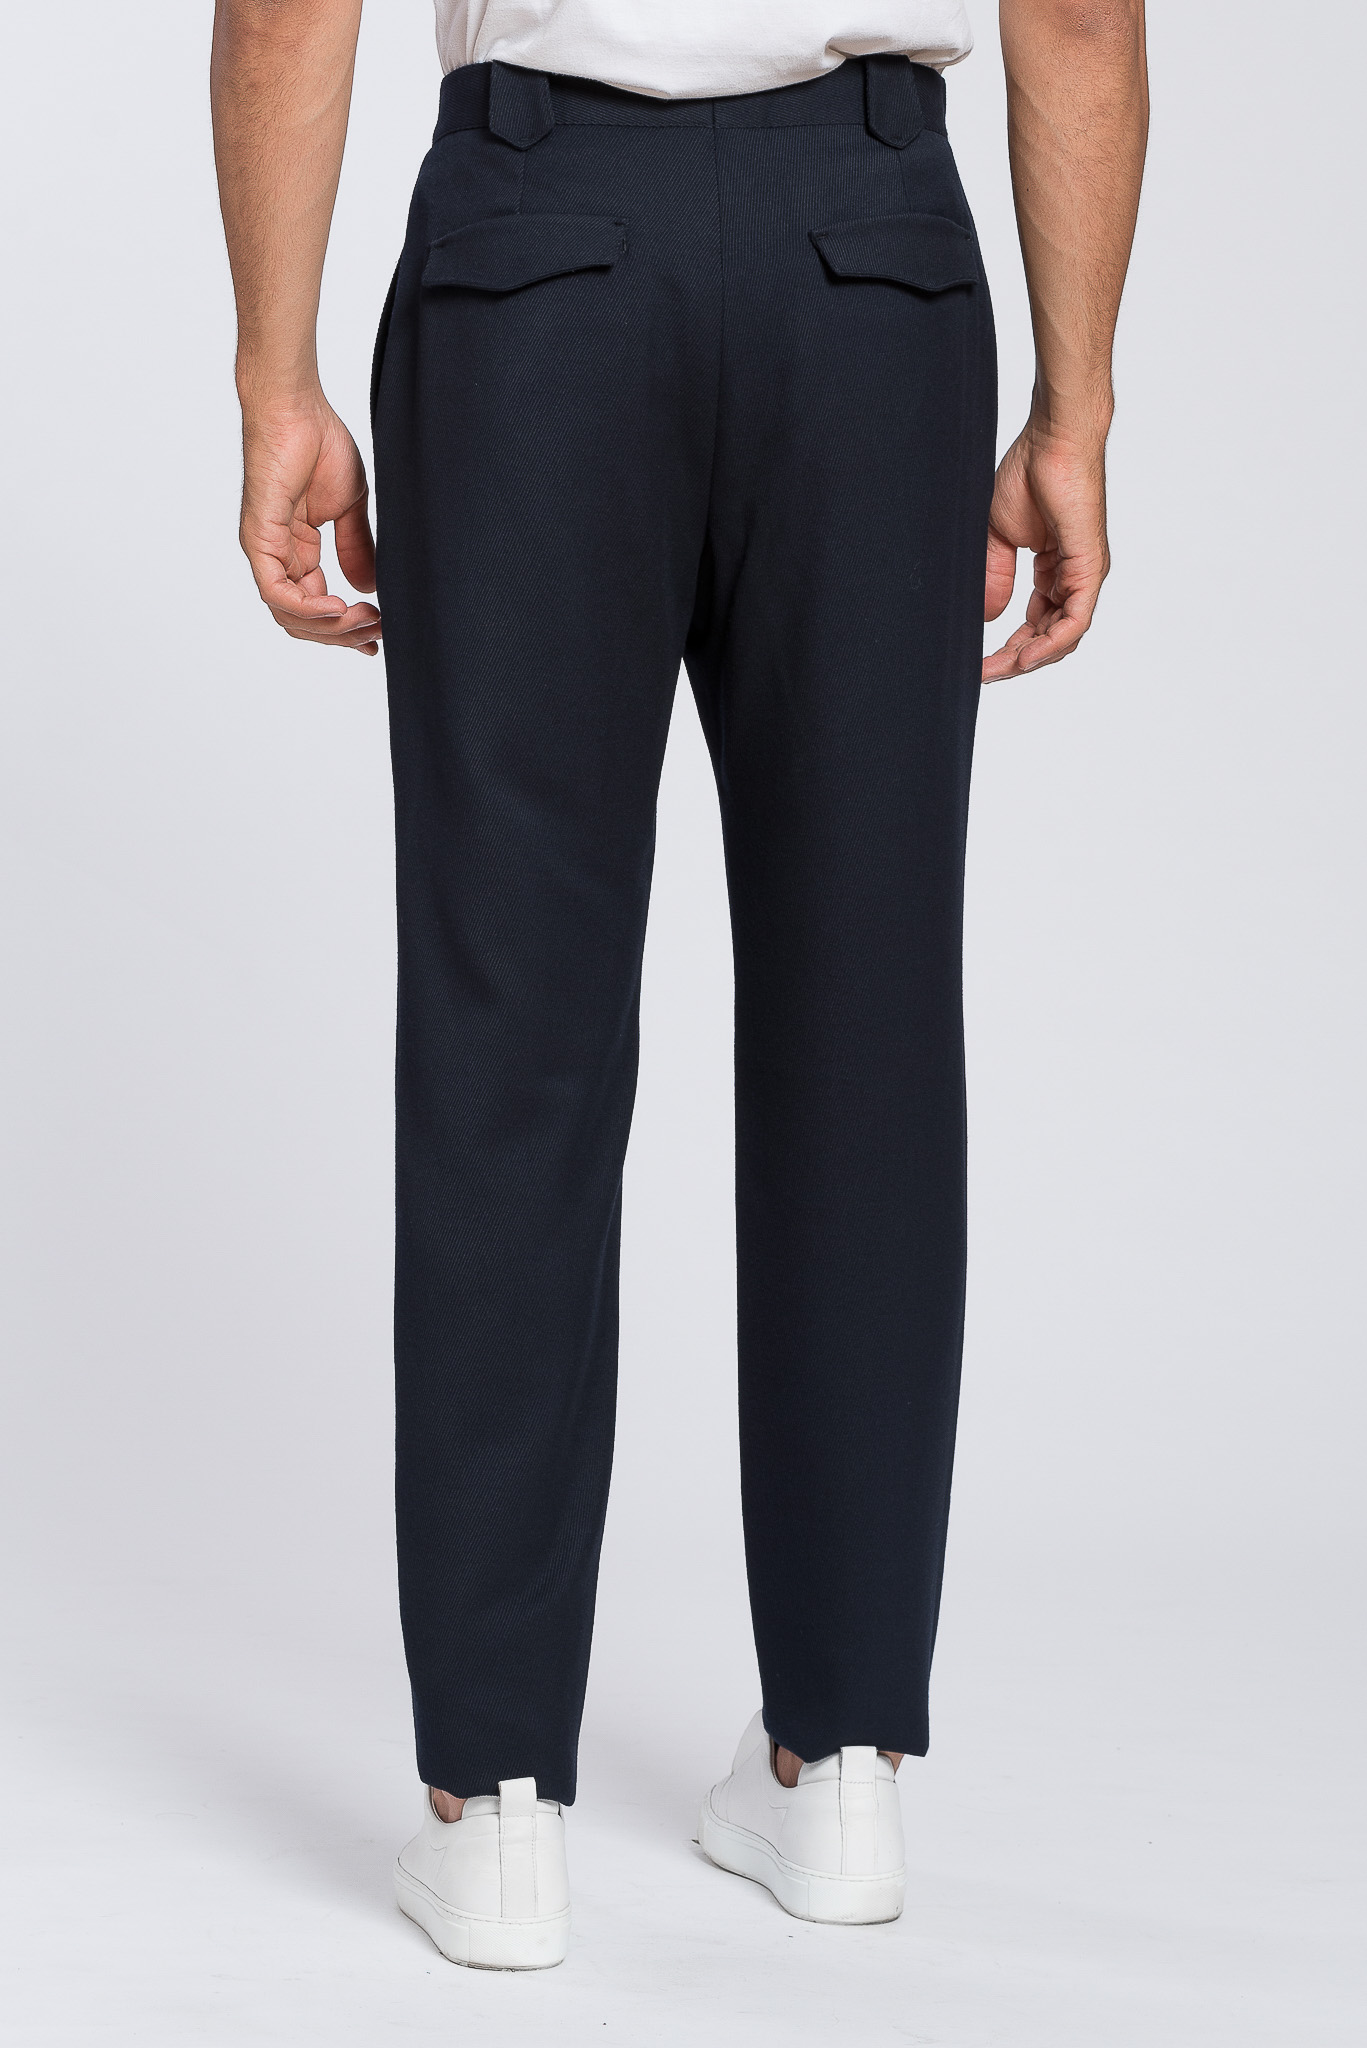 New 850$ GIORGIO ARMANI Black Label Pant Trousers Blue Wool Twill ...